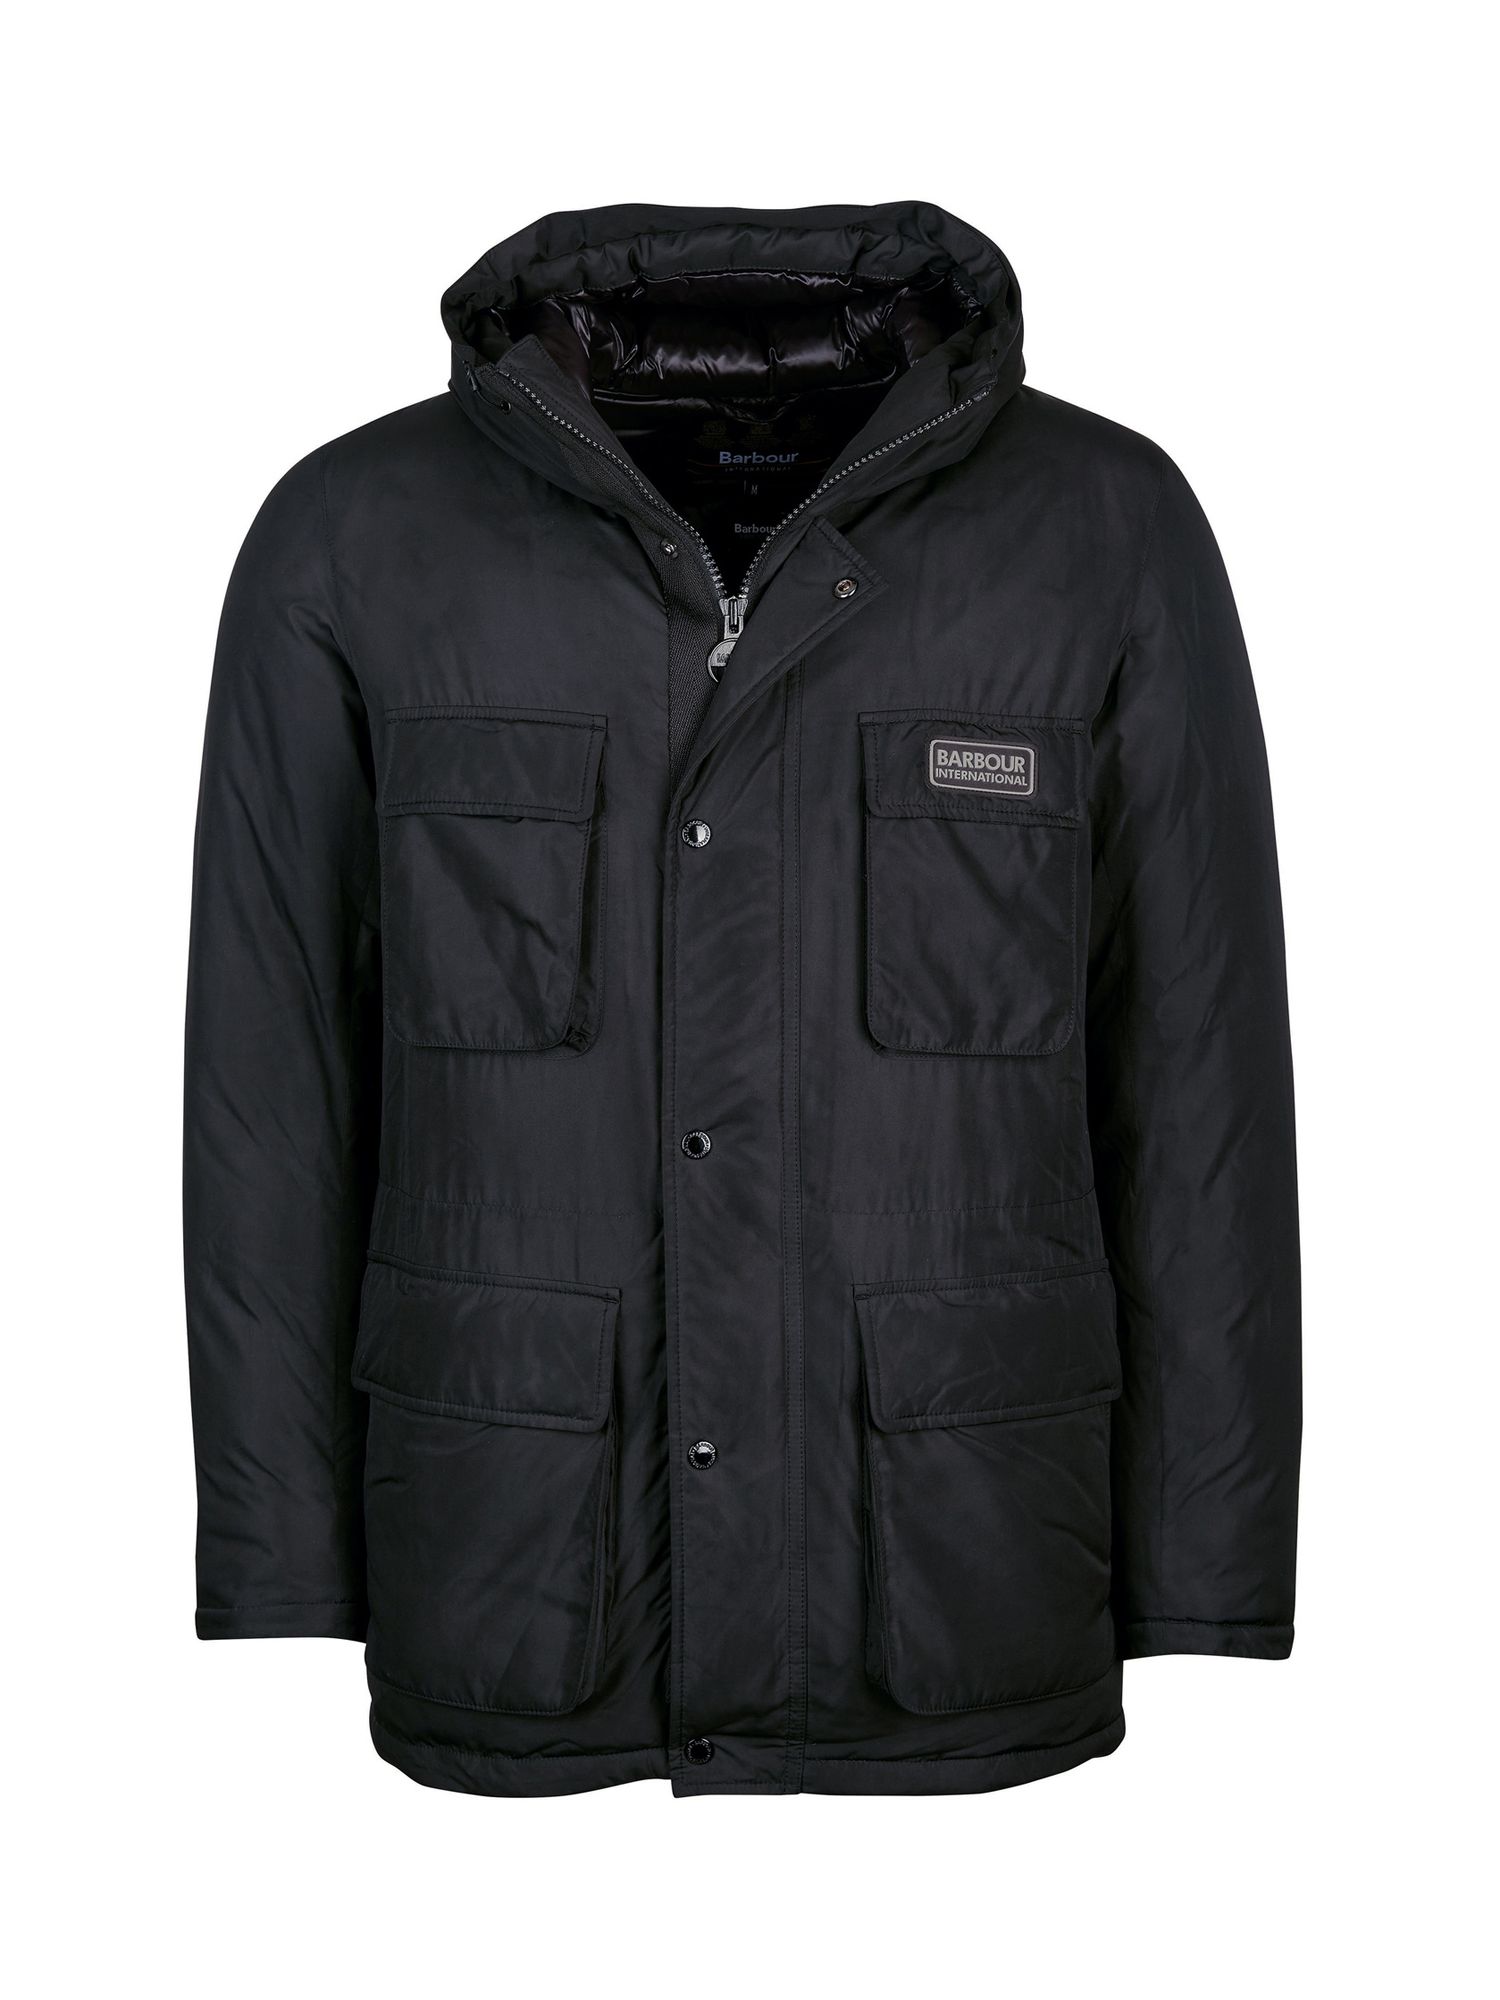 Barbour International Arden Quilted Jacket, Black at John Lewis & Partners